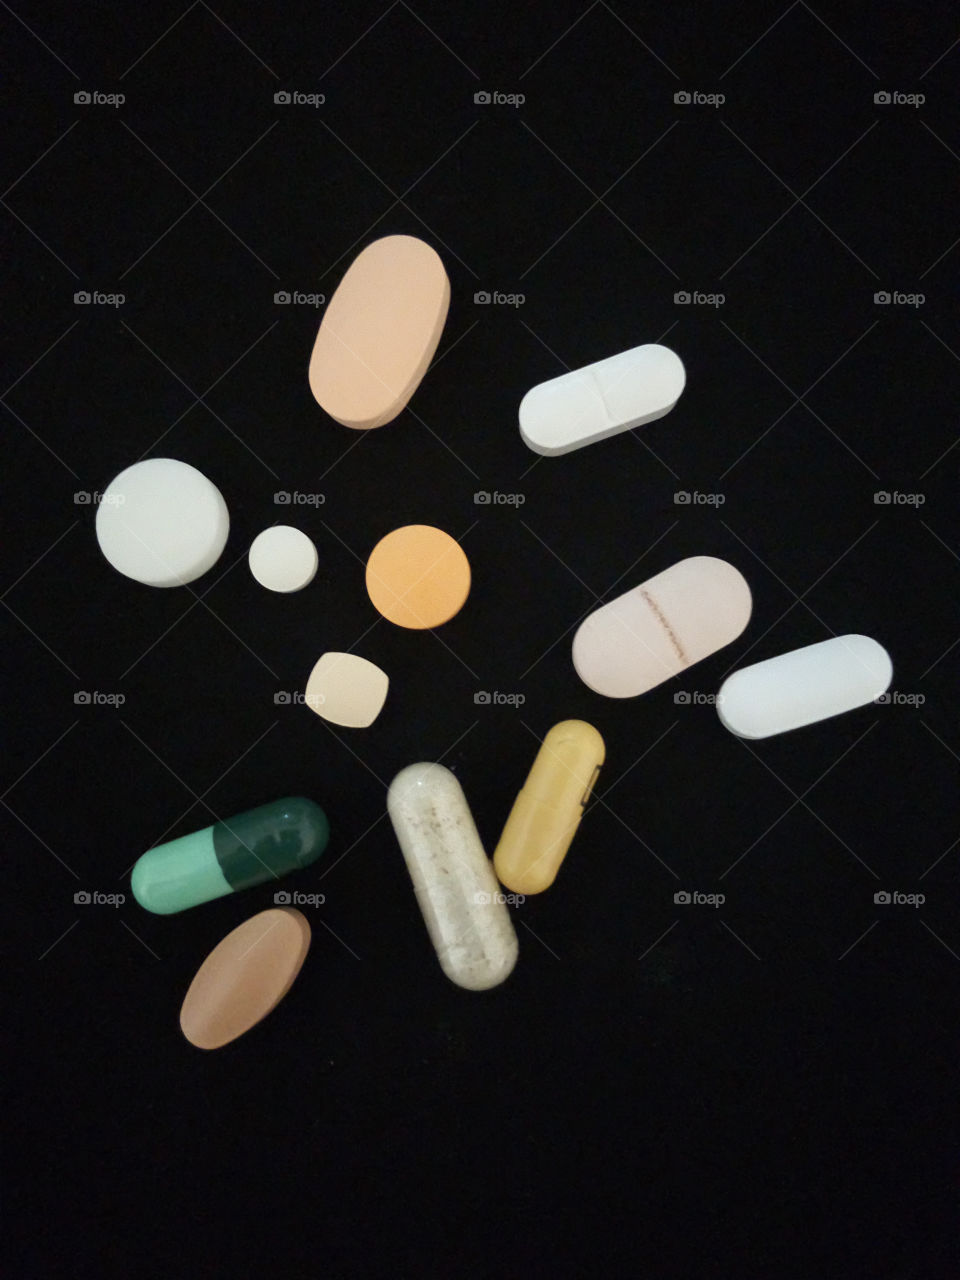 a group of pills